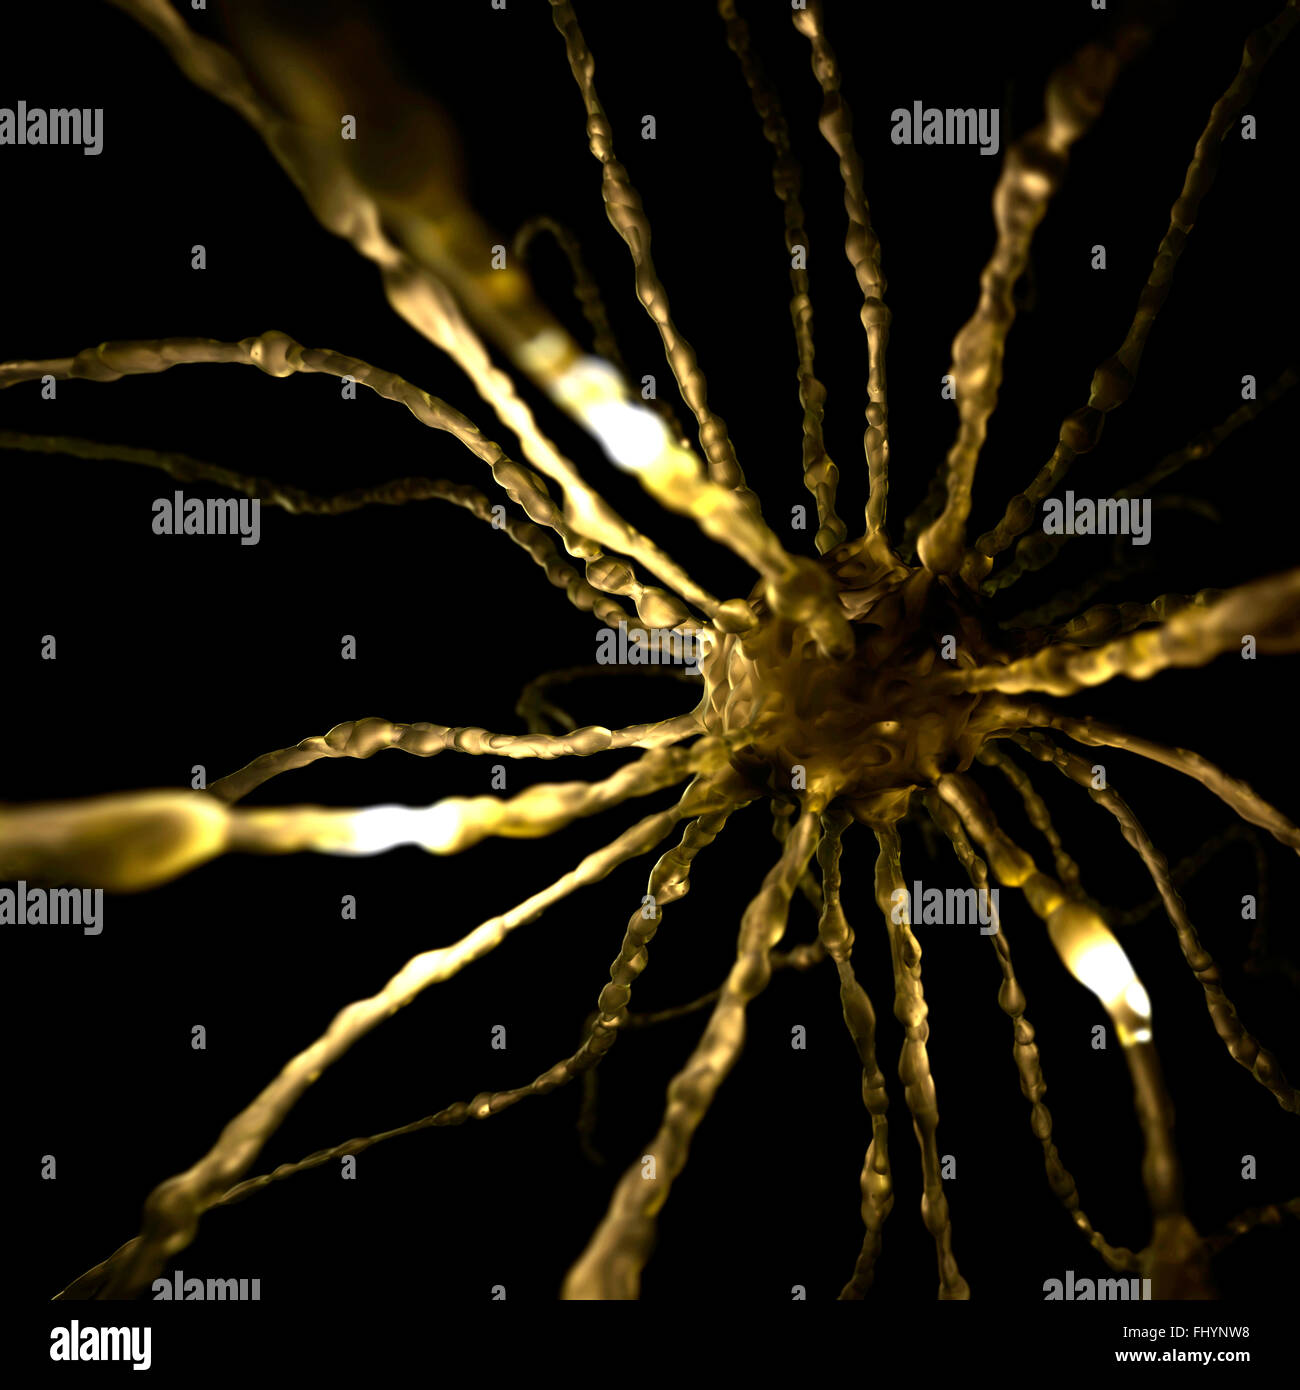 Nerve cell, illustration. Stock Photo